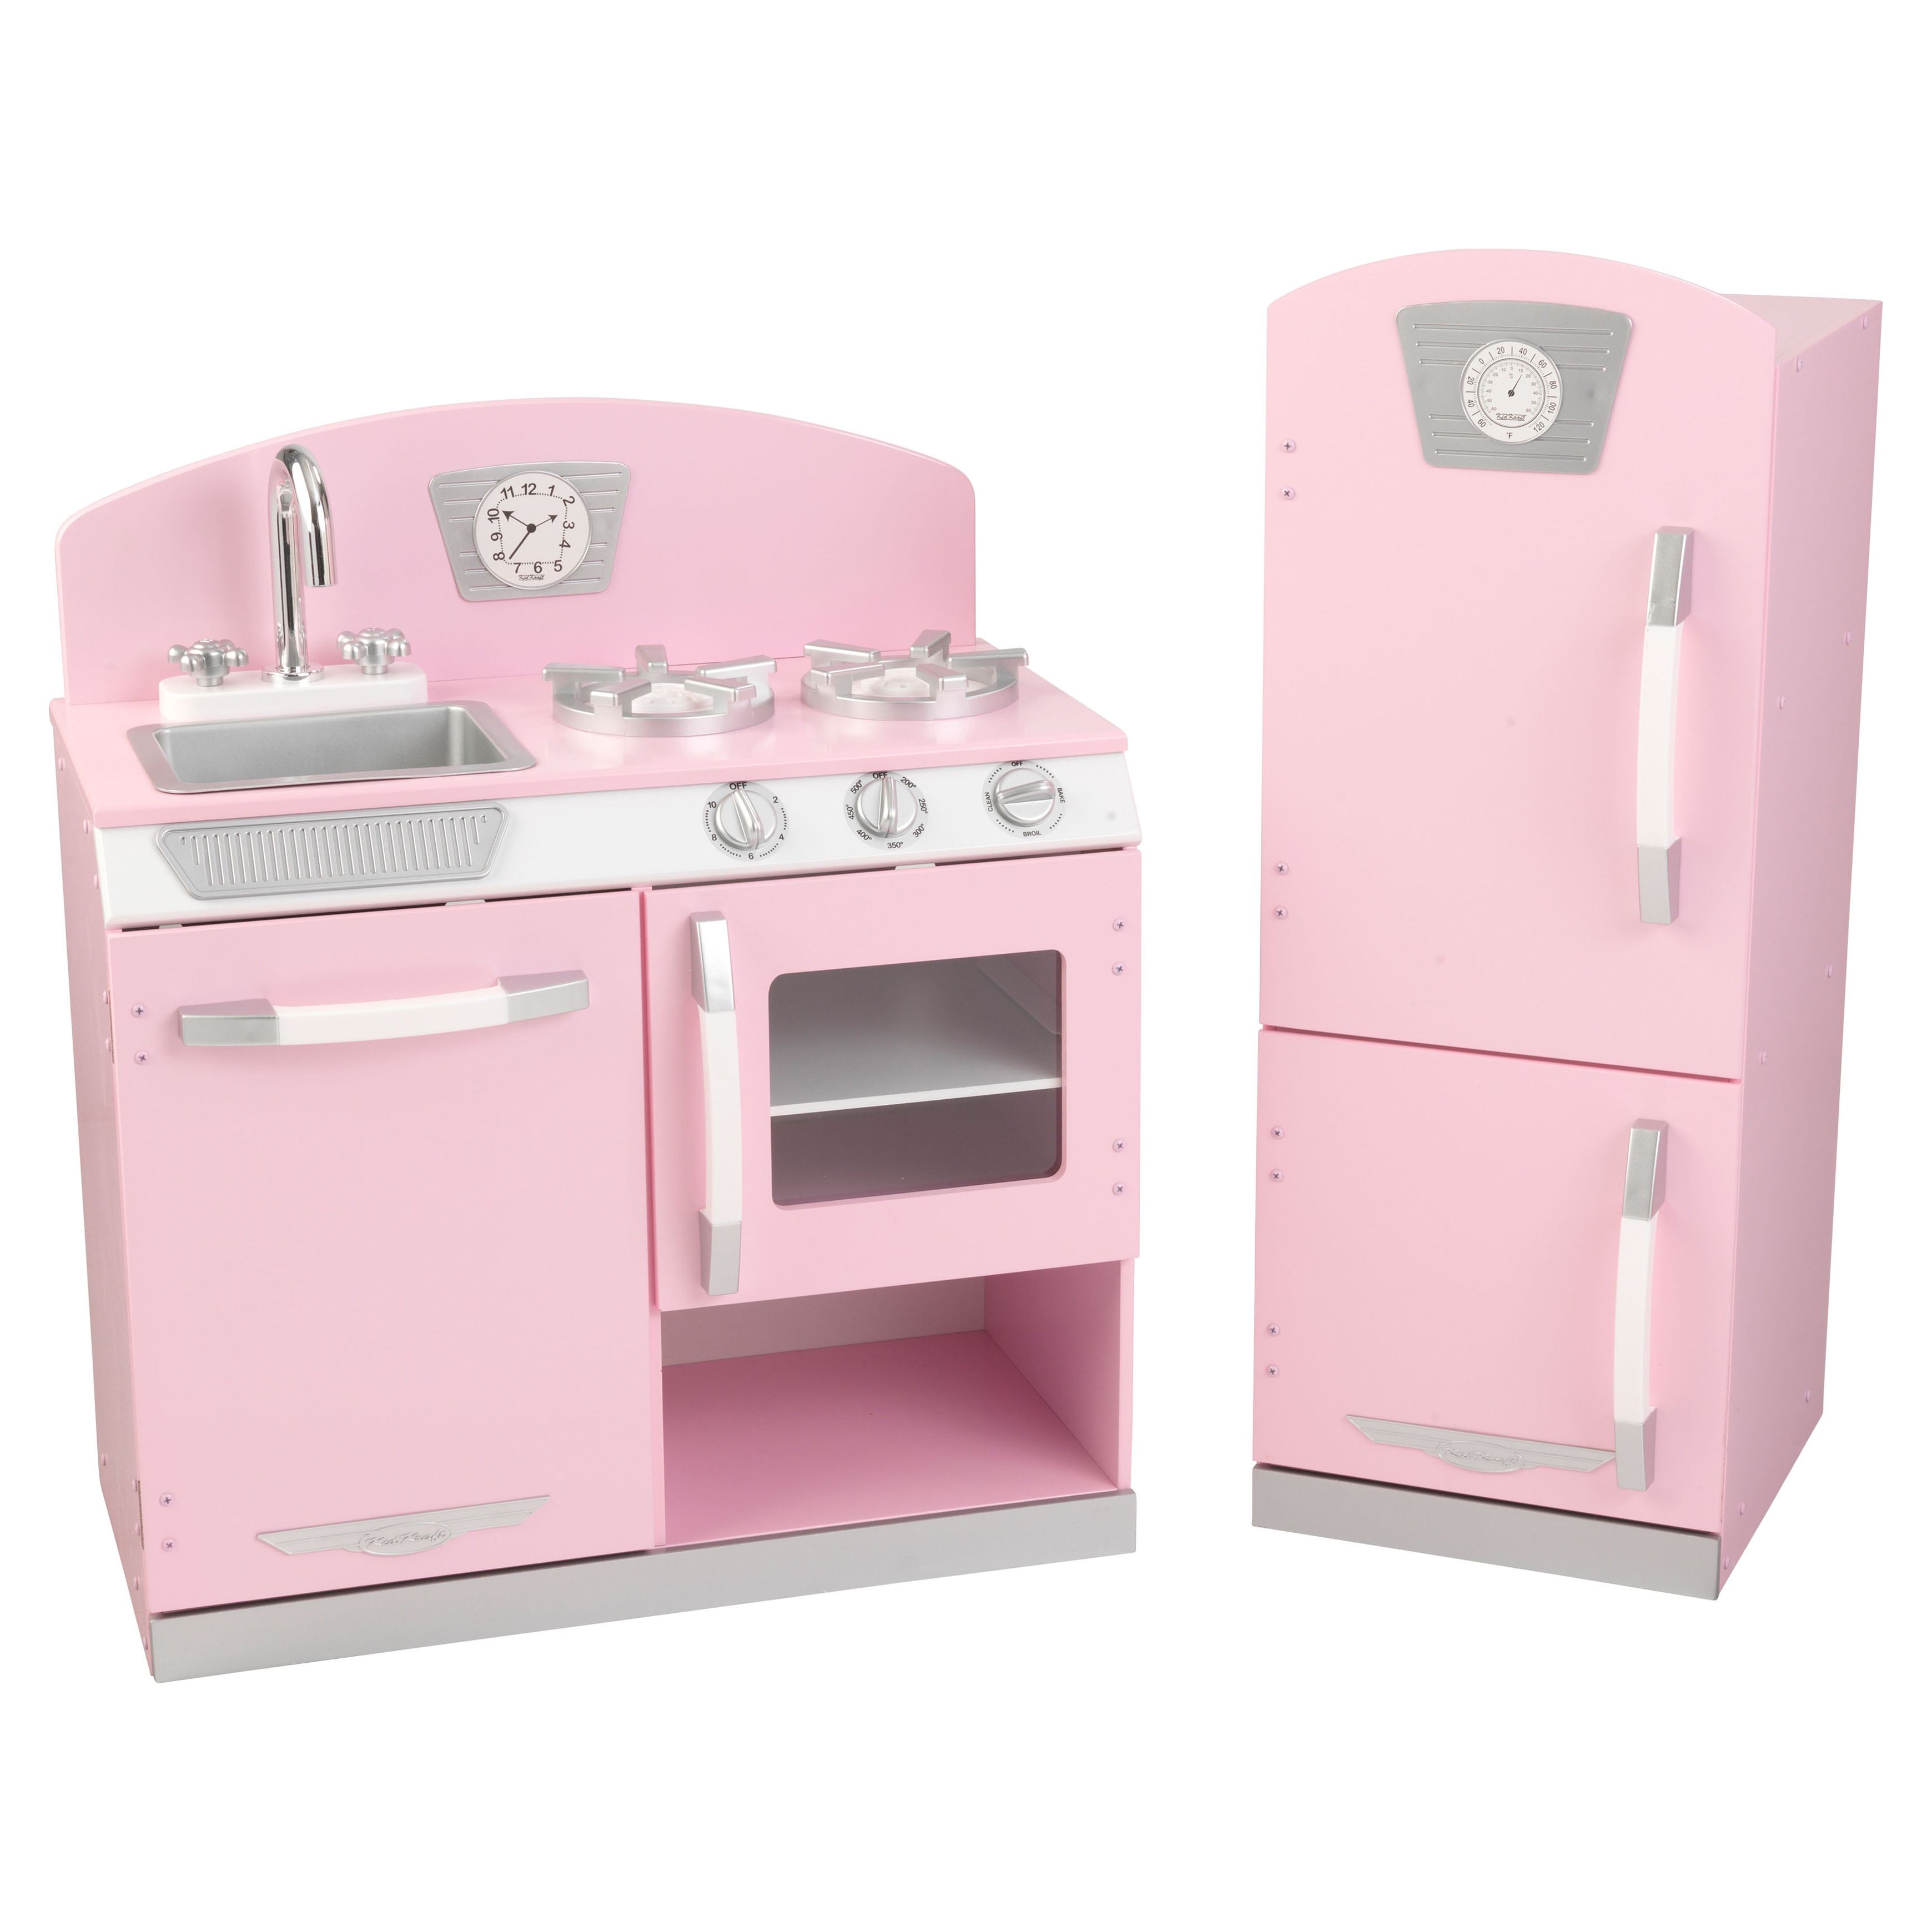 KidKraft Pink Retro Wooden Play Kitchen and Refrigerator 2-Piece Set - image 1 of 14